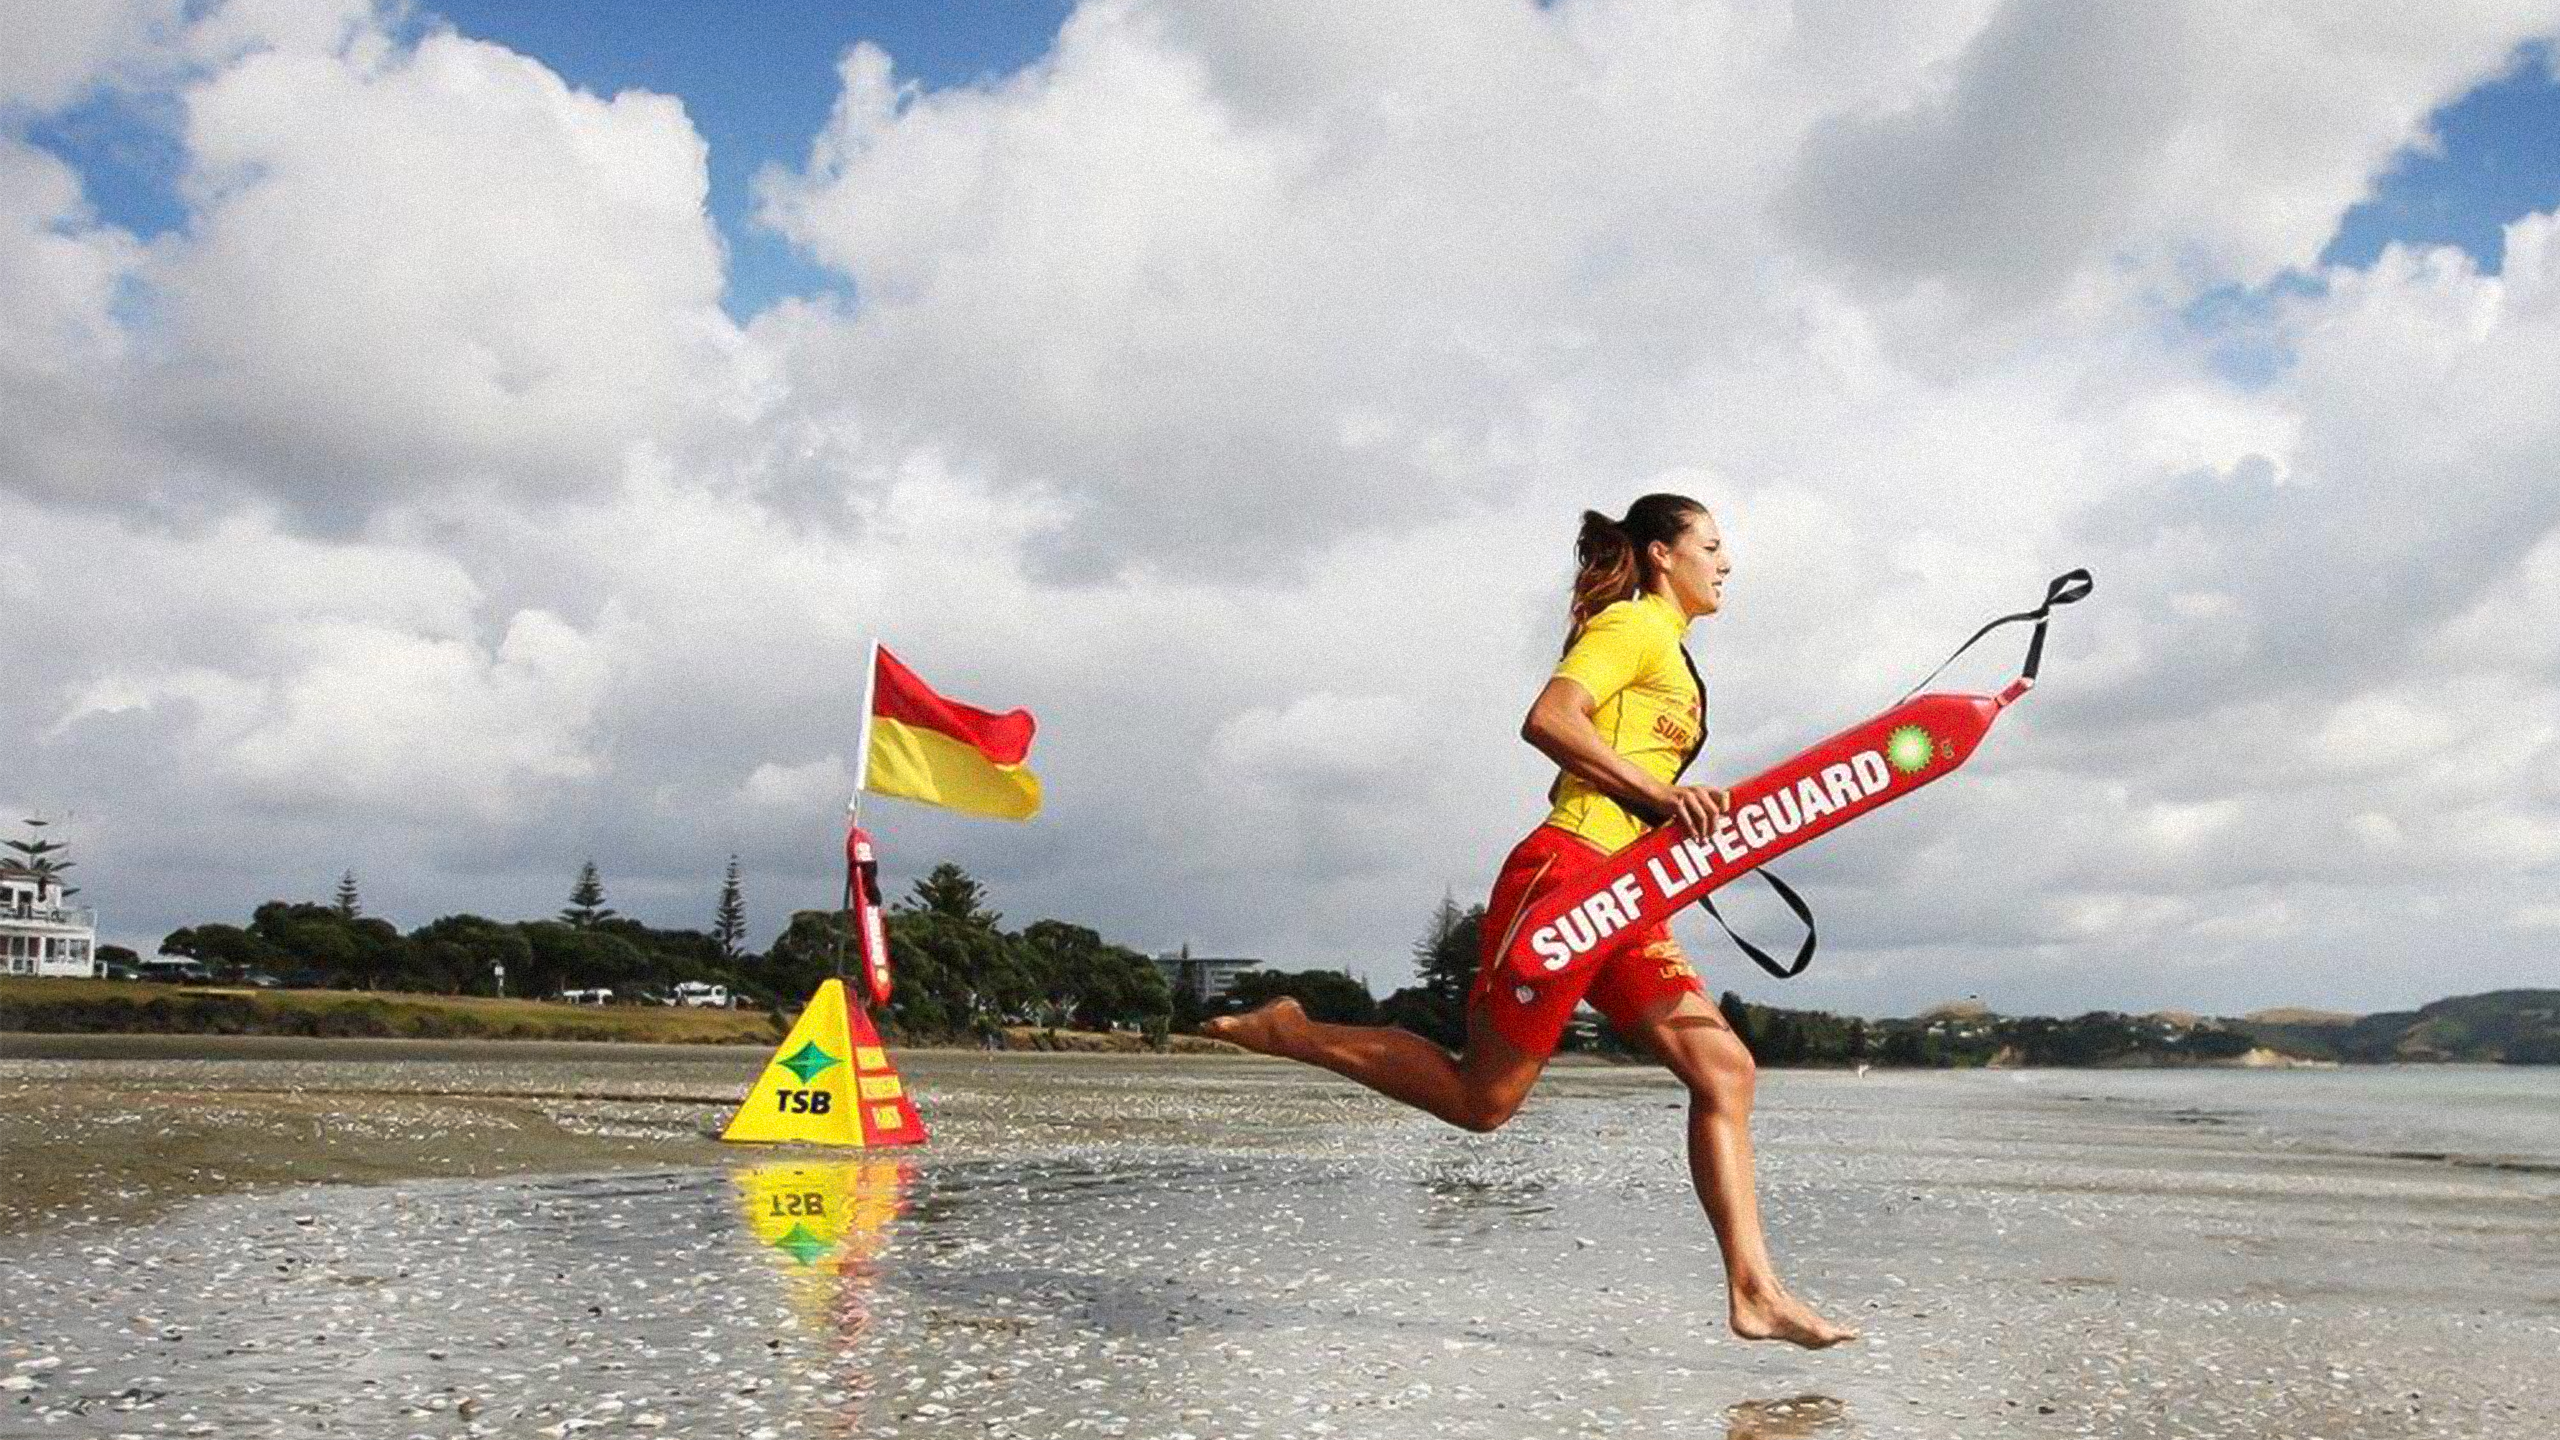 TSB backs surf lifesaving in New Zealand